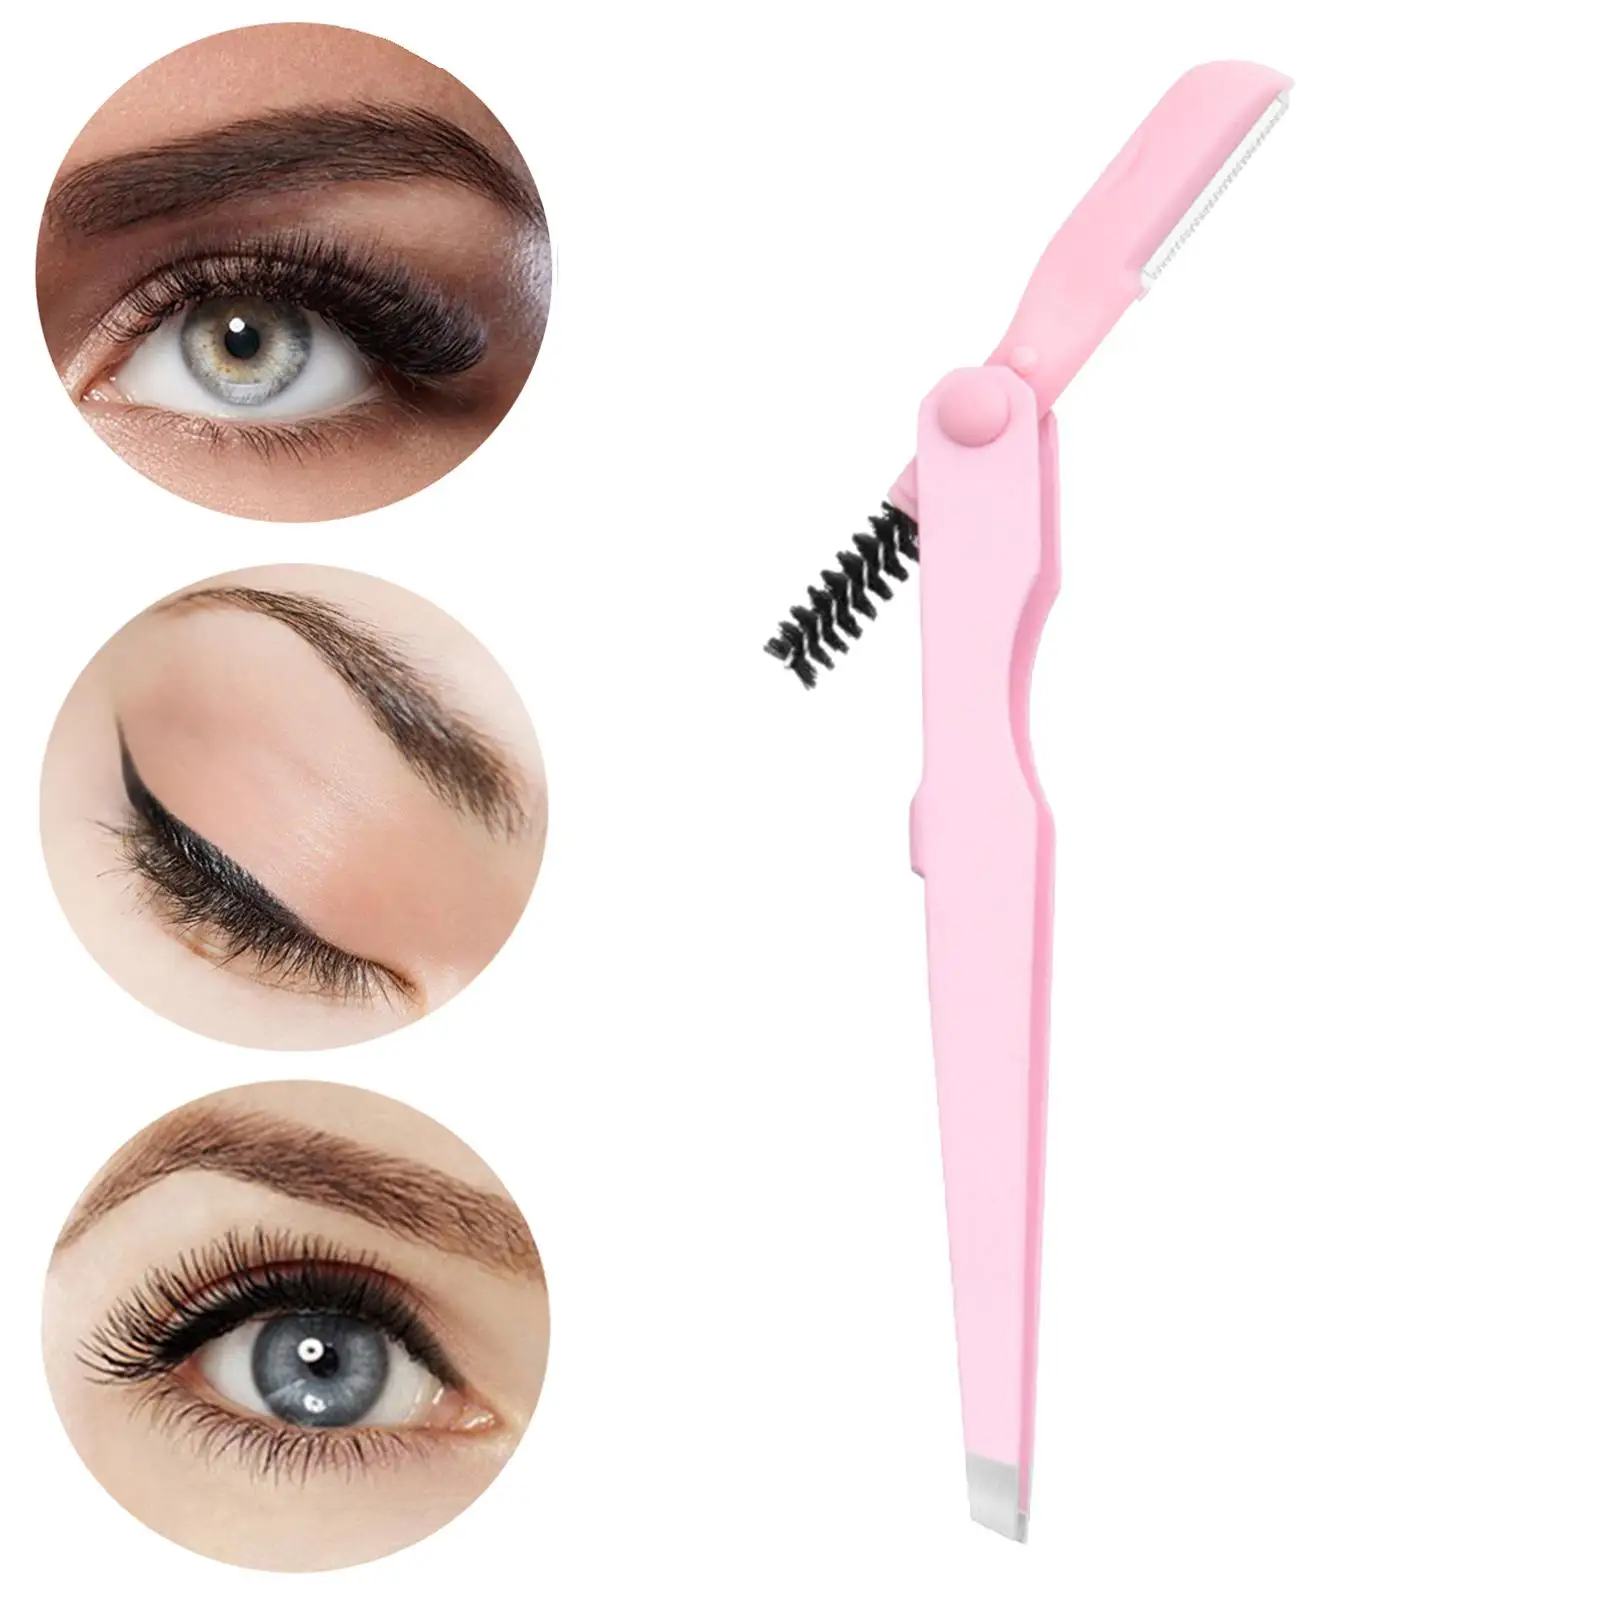 Eyebrow Tweezers Tool Multipurpose Comfortable Hair Remover 3 in 1